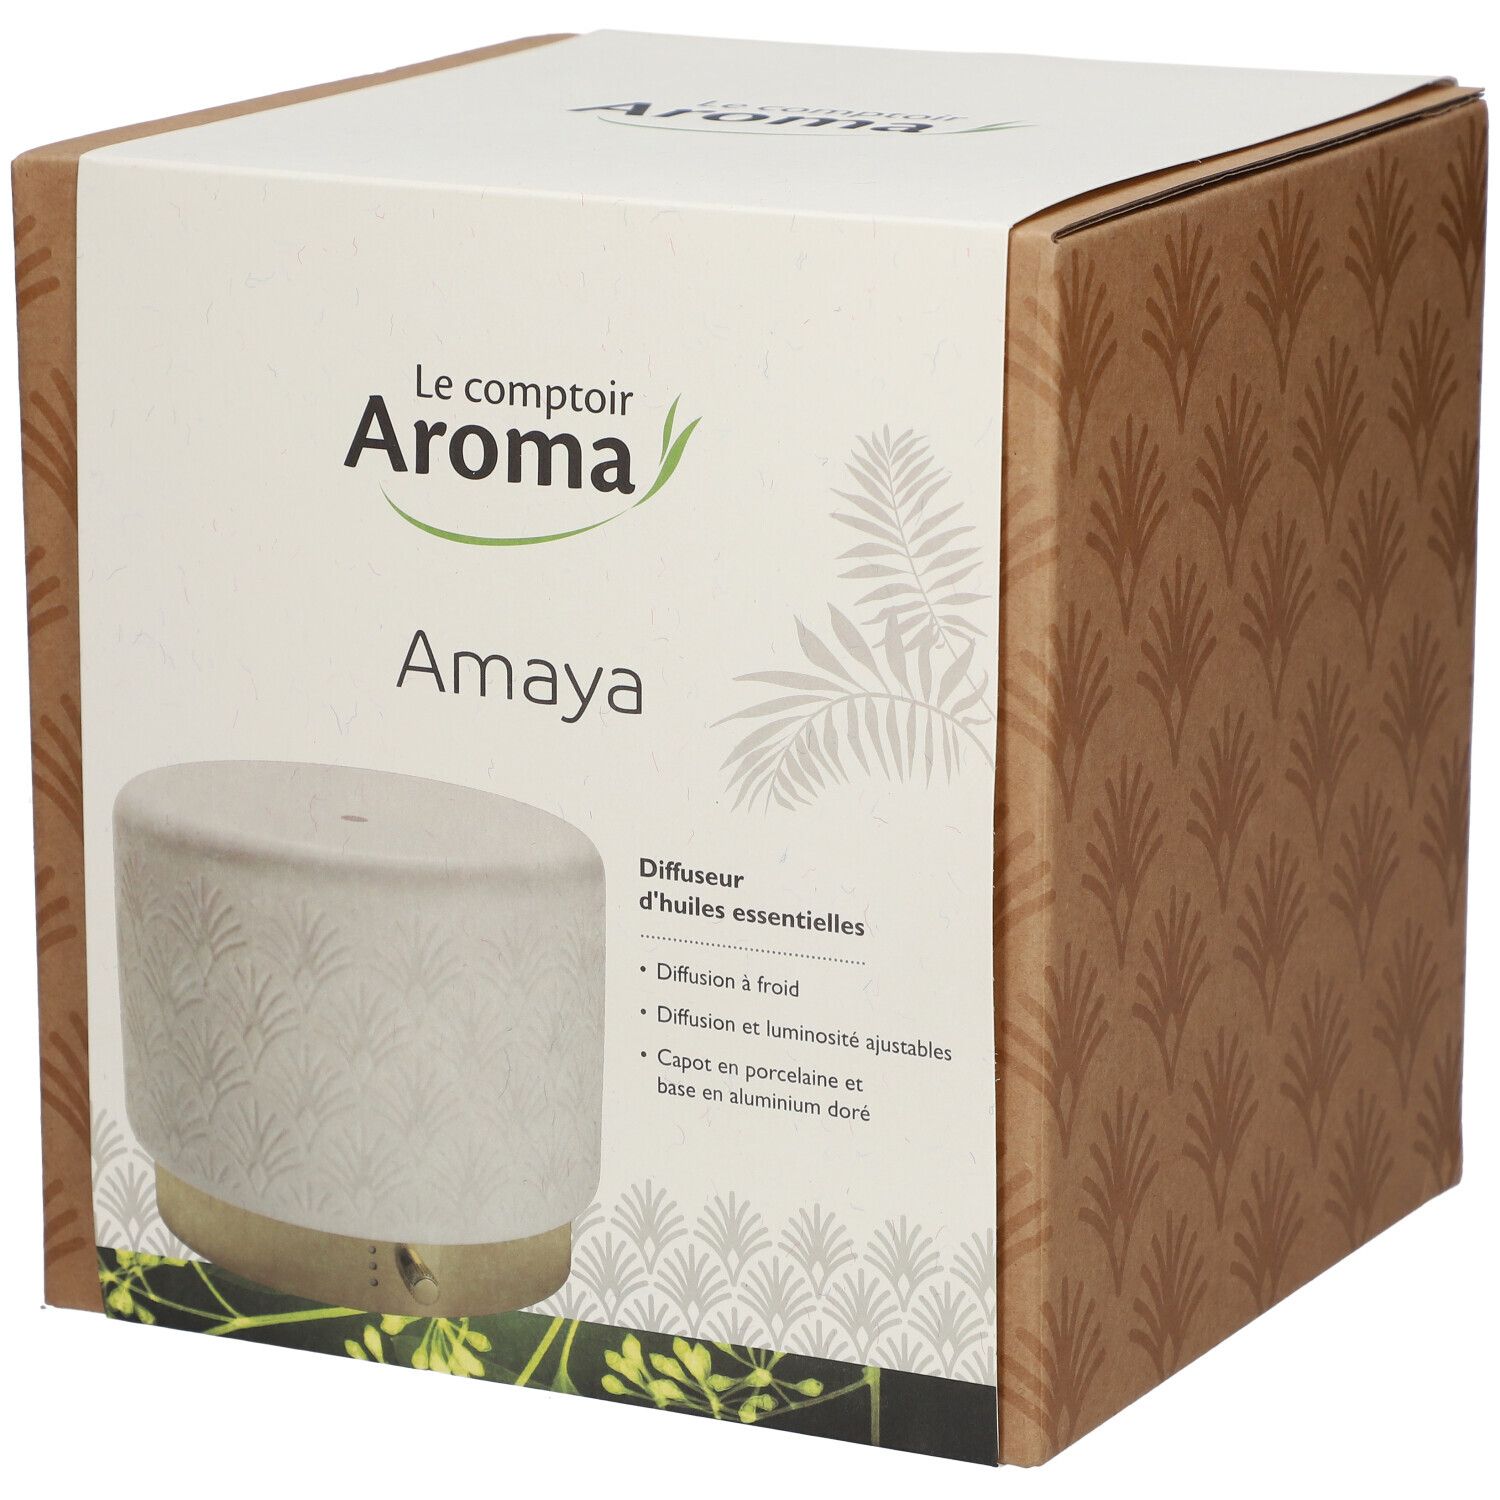 Le comptoir Aroma Diffuseur d’huiles essentielles Amaya